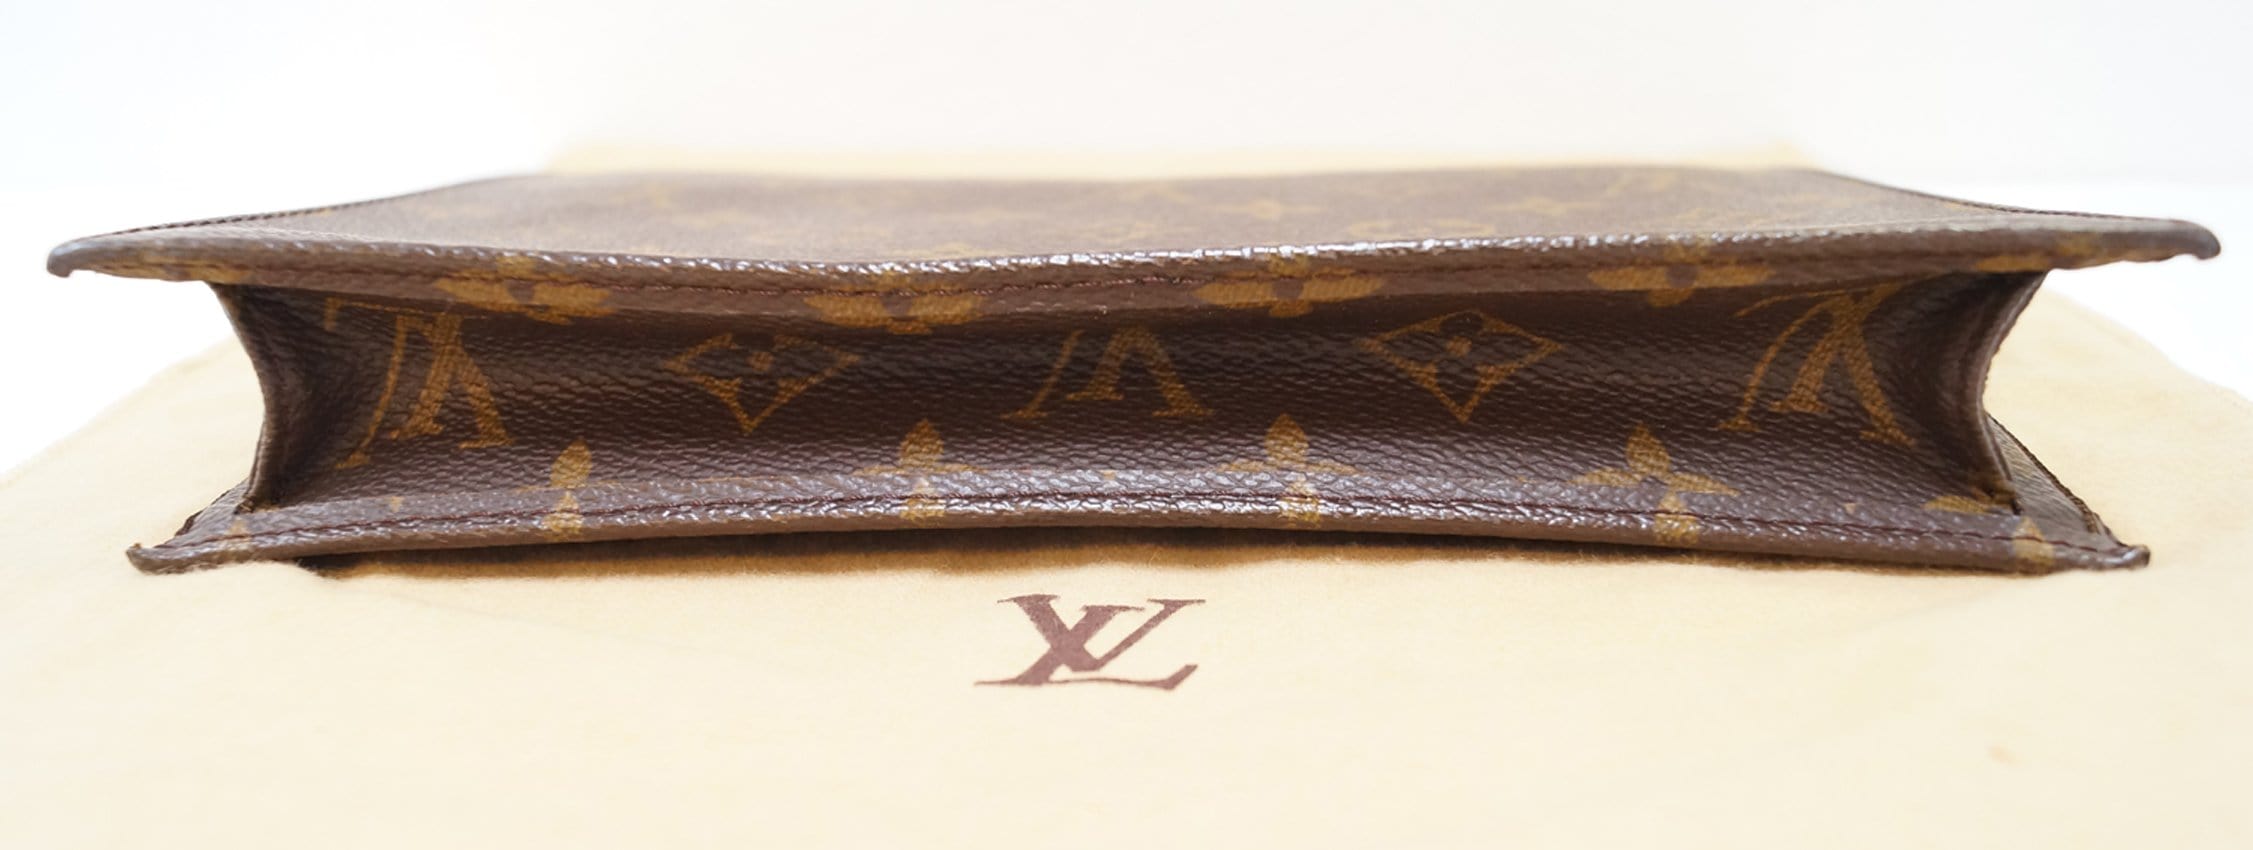 louis-vuitton wallet monogram (vintage) *damaged But Perfect For A